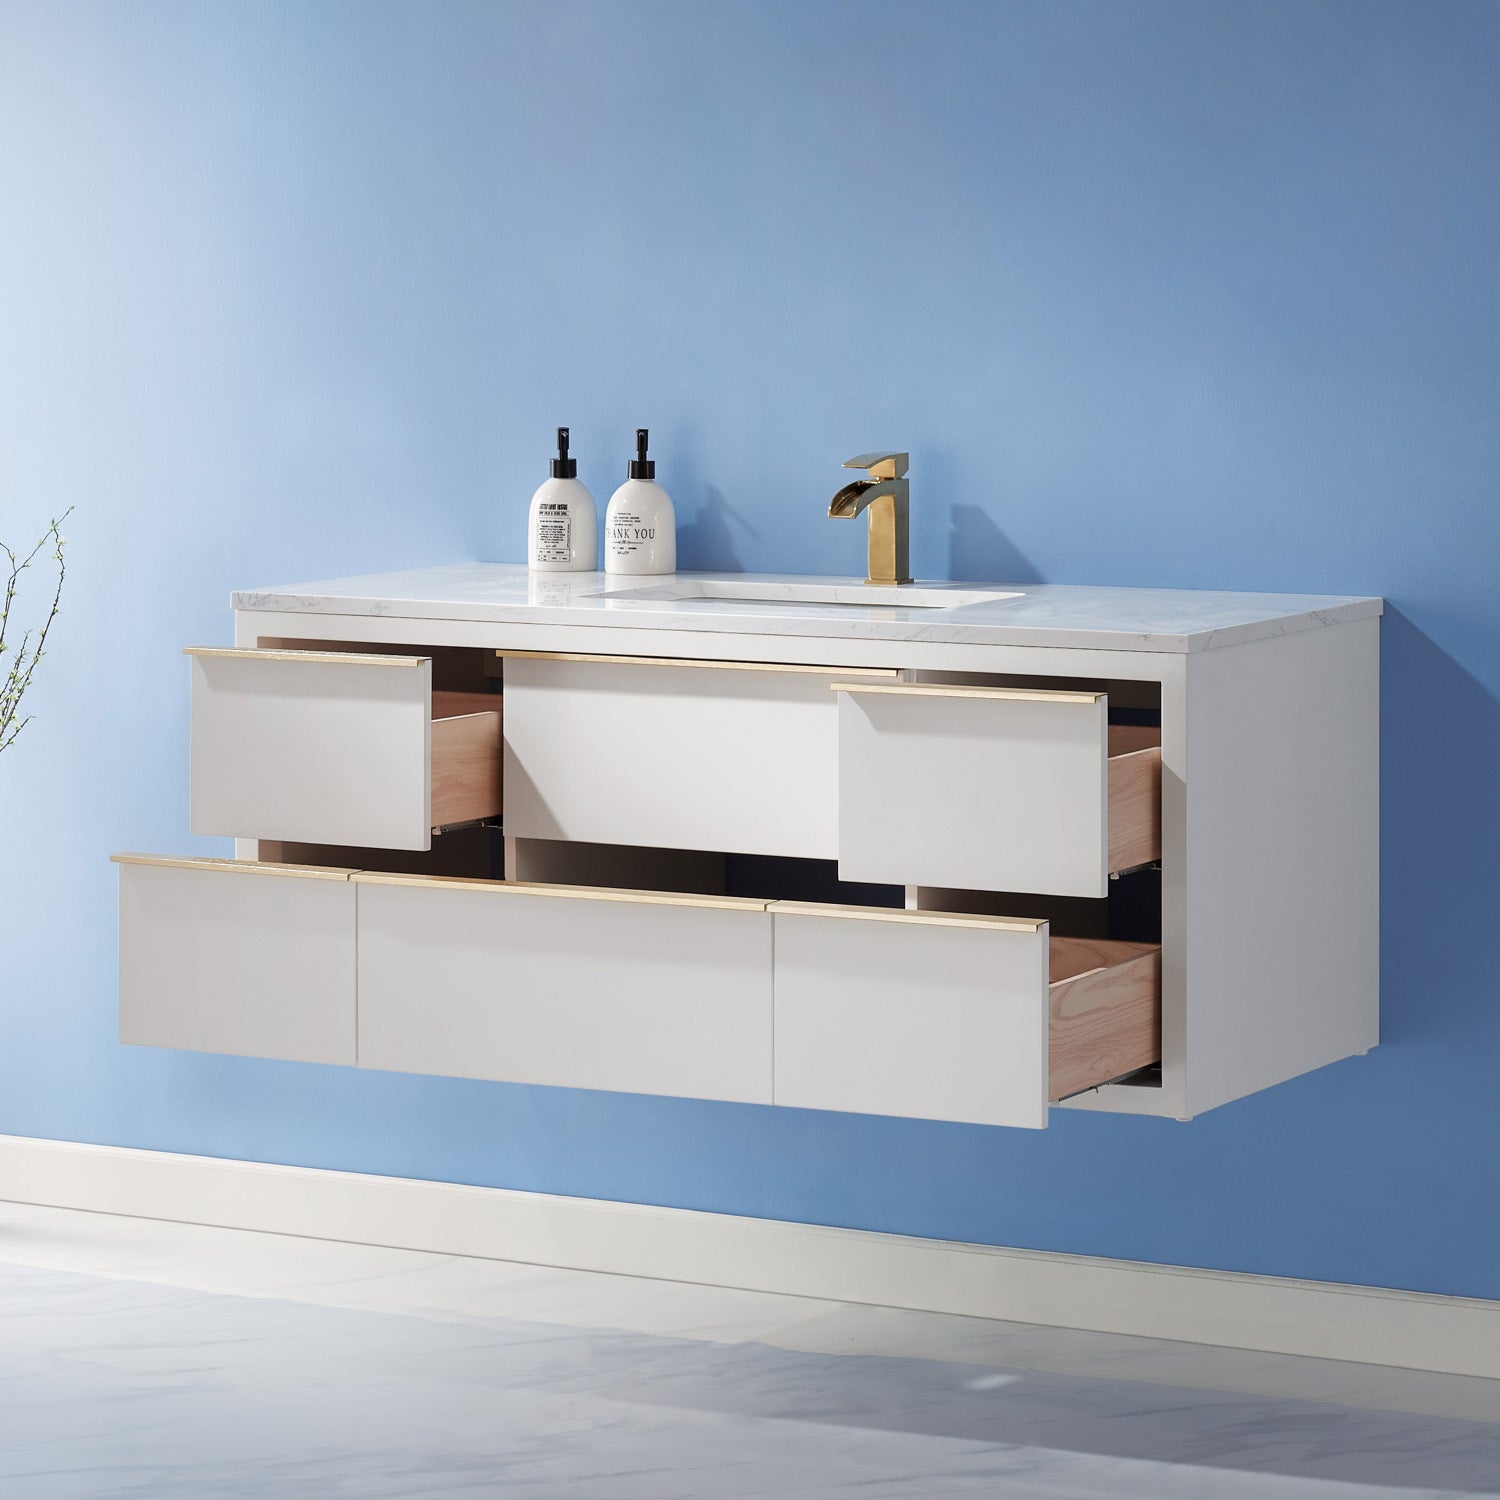 Morgan 48" Single Bathroom Vanity Set in White and Composite Aosta White Stone Countertop